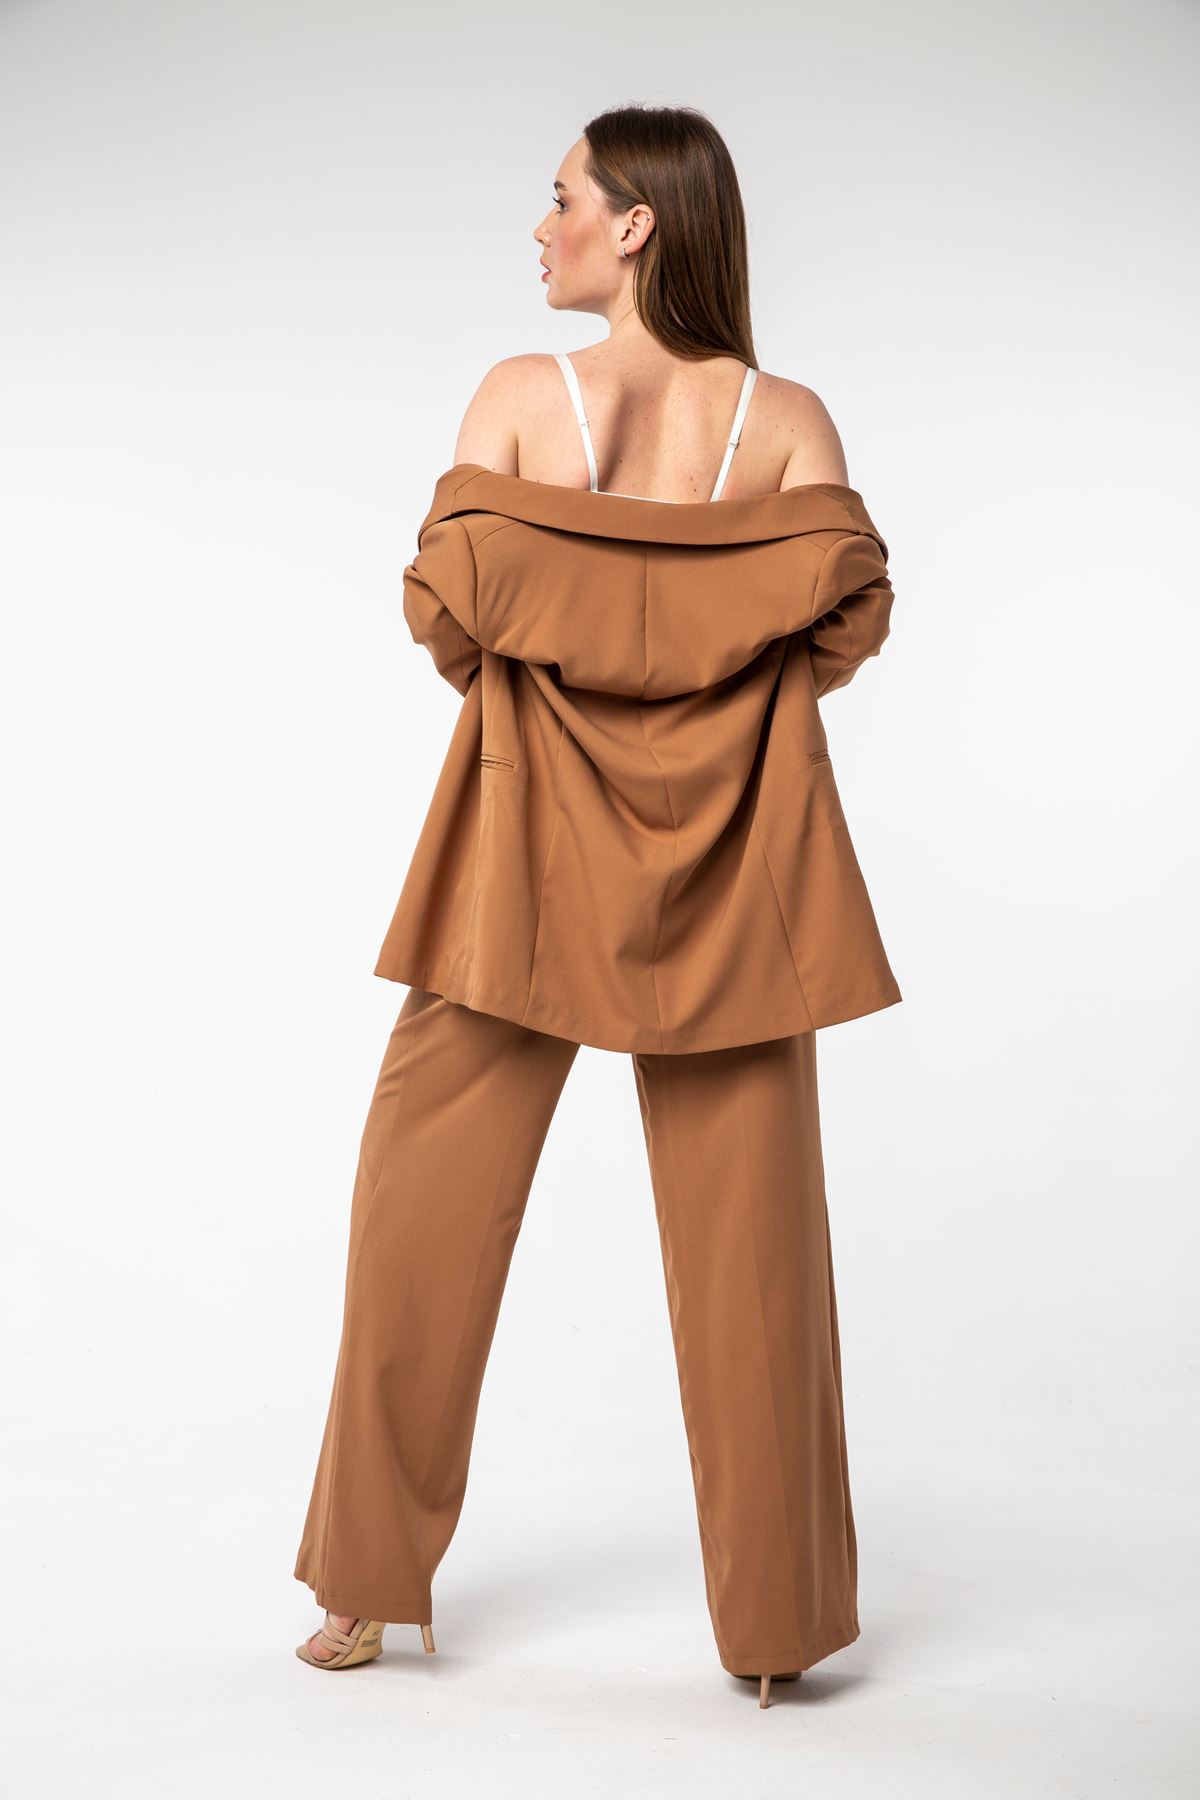 Atlas Fabric Revere Collar Below Hip Classical Single Button Women Jacket - Brown